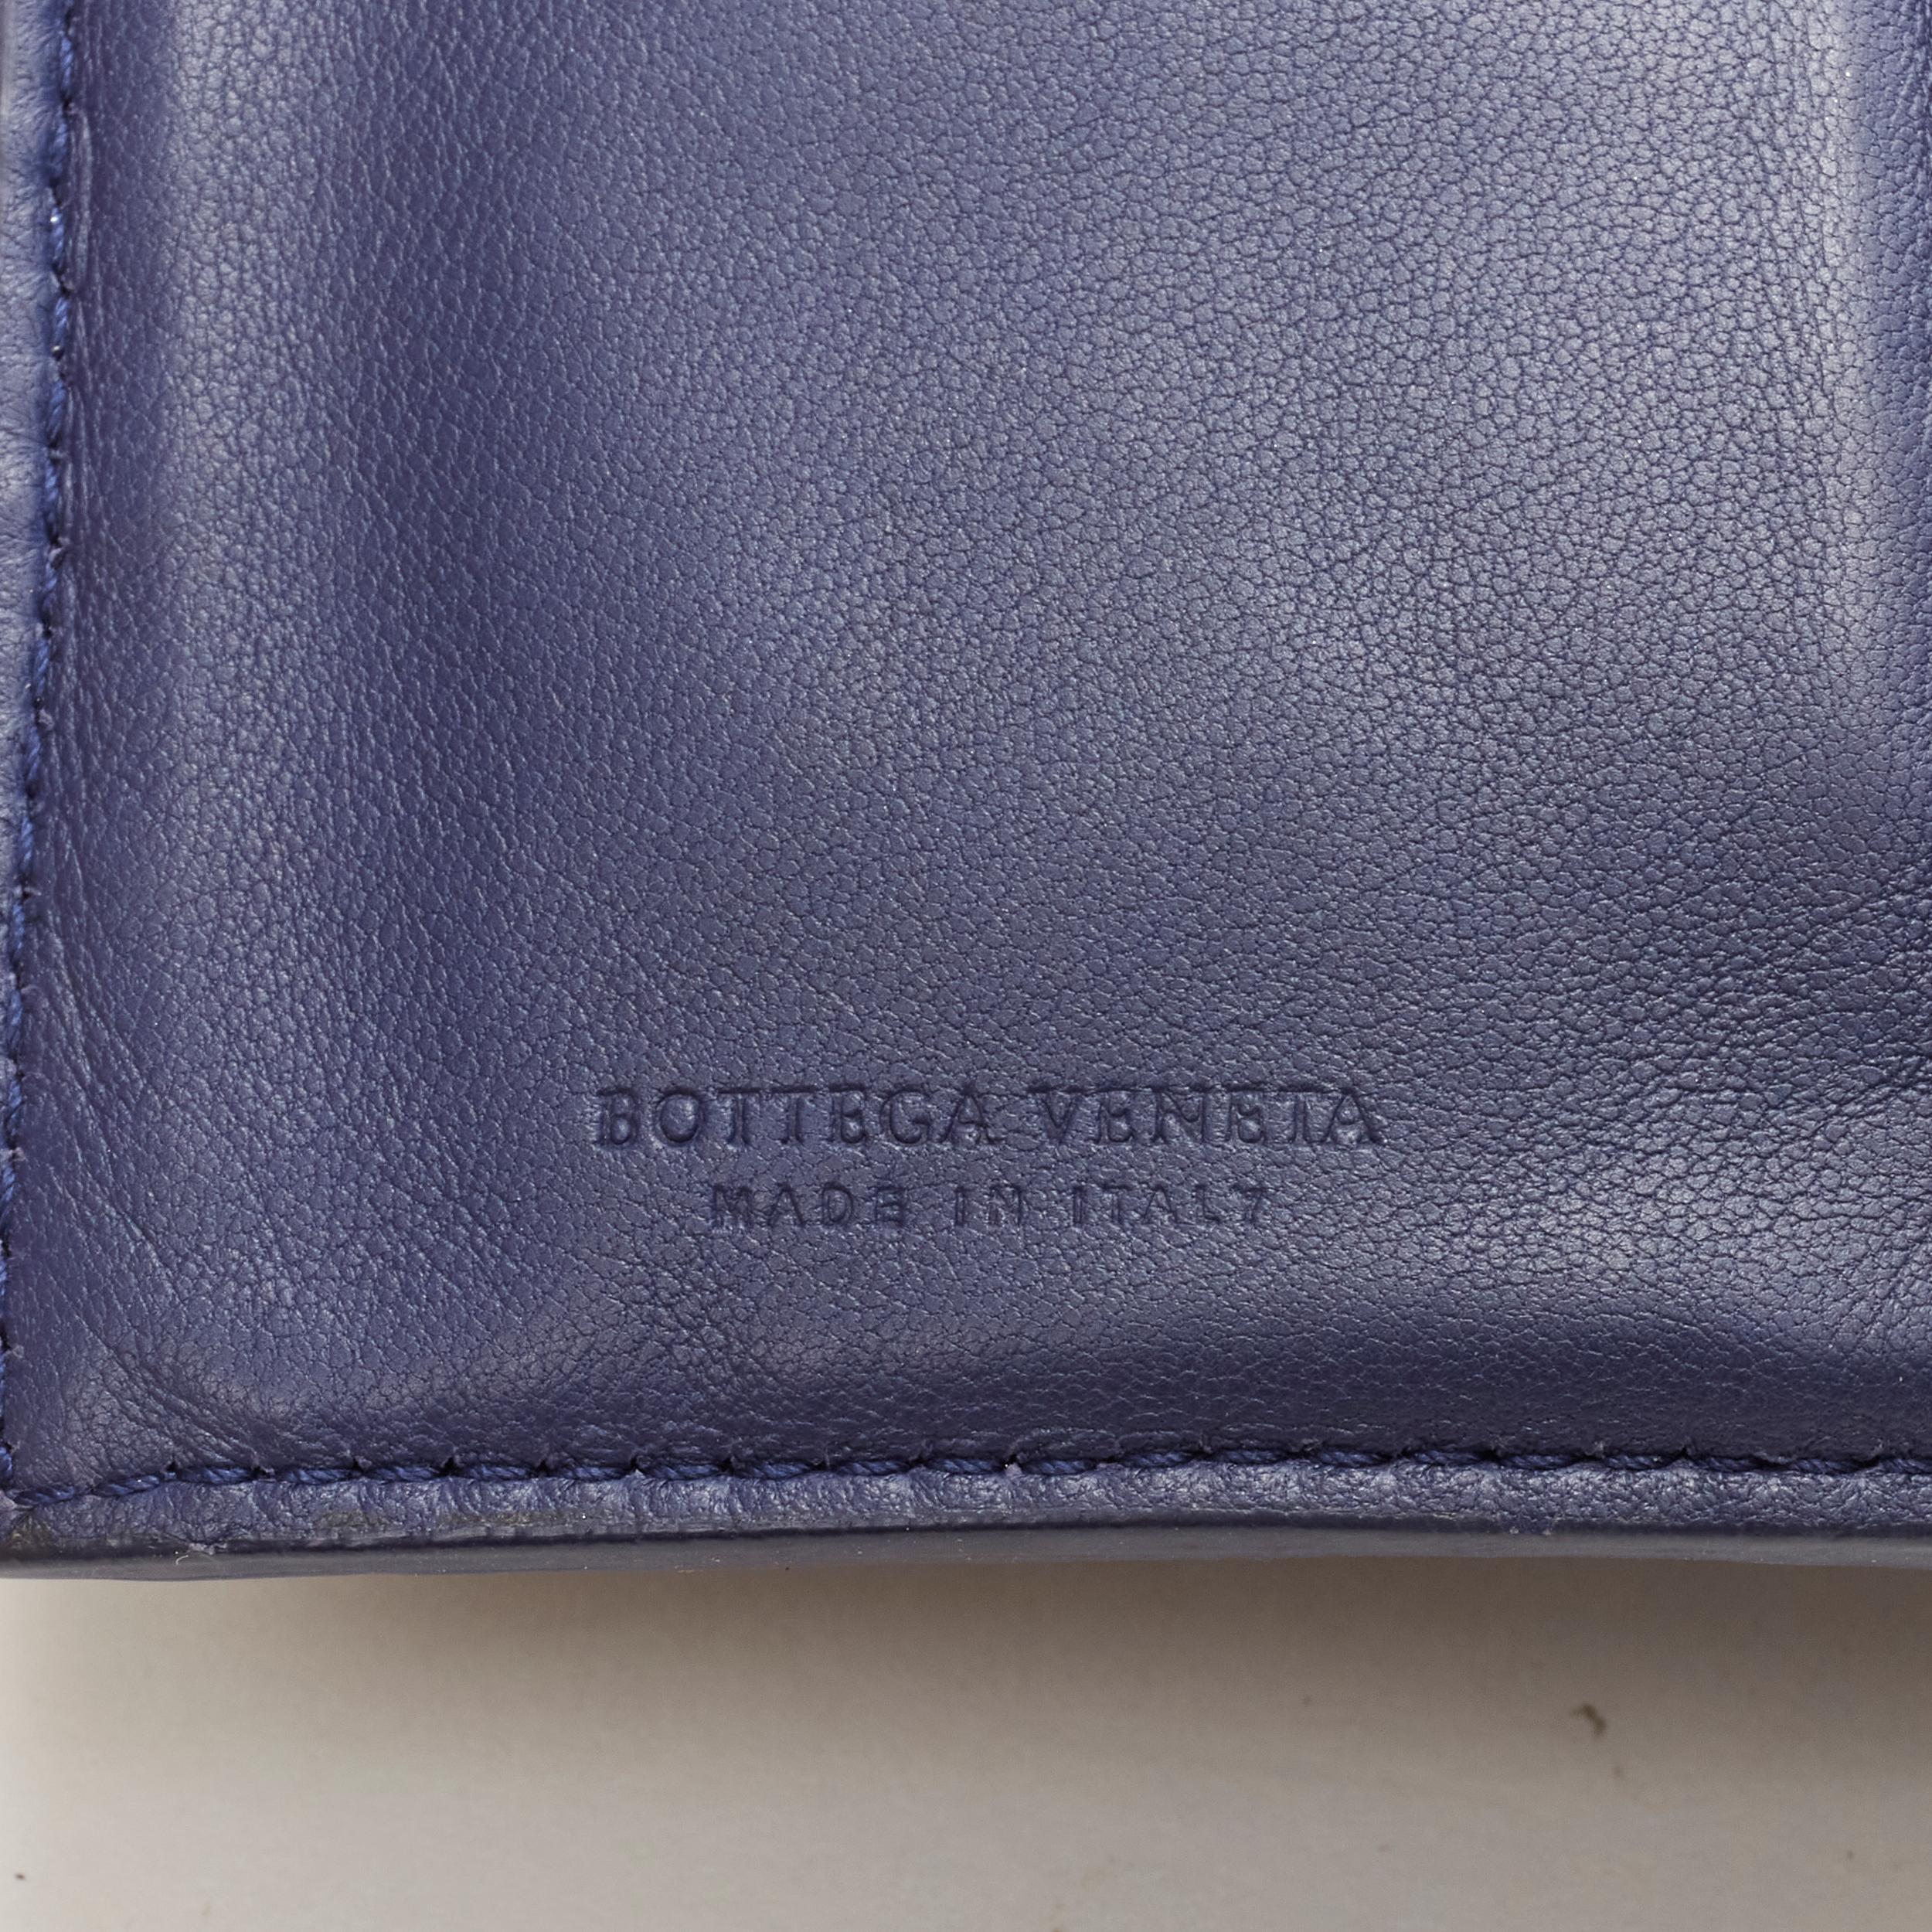 BOTTEGA VENETA Intrecciato Weave navy blue leather zip coins 10-slot wallet 6